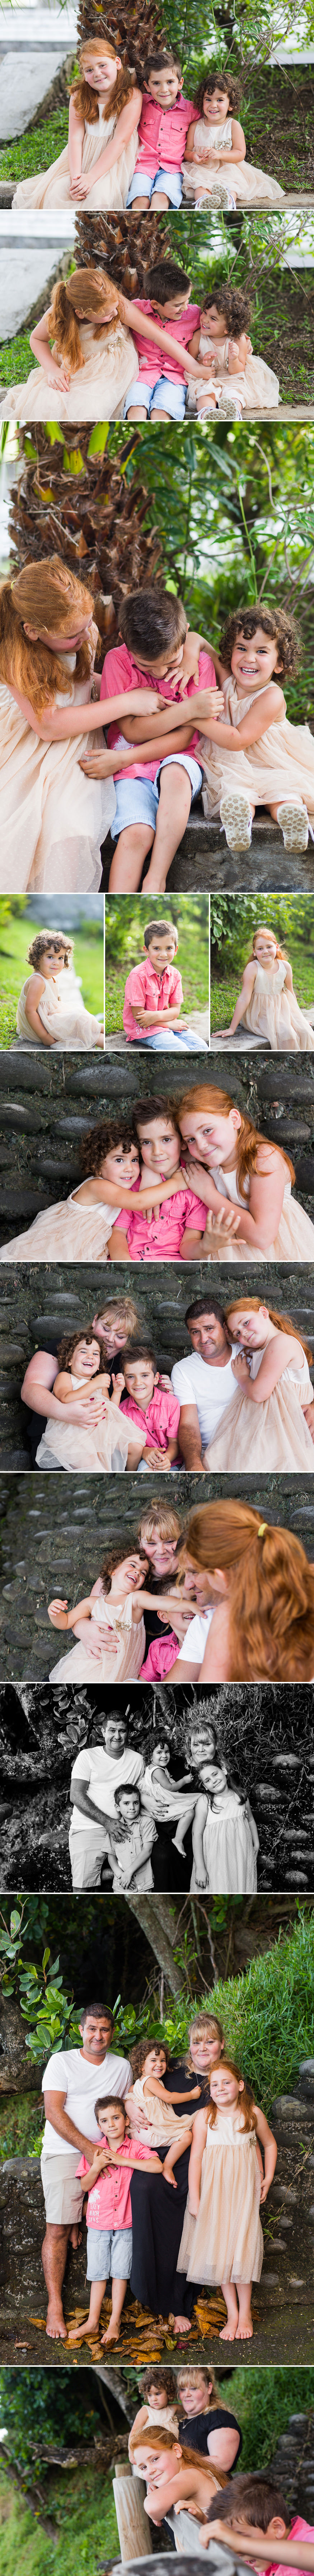 photographe famille ile de la réunion fannytiara provence